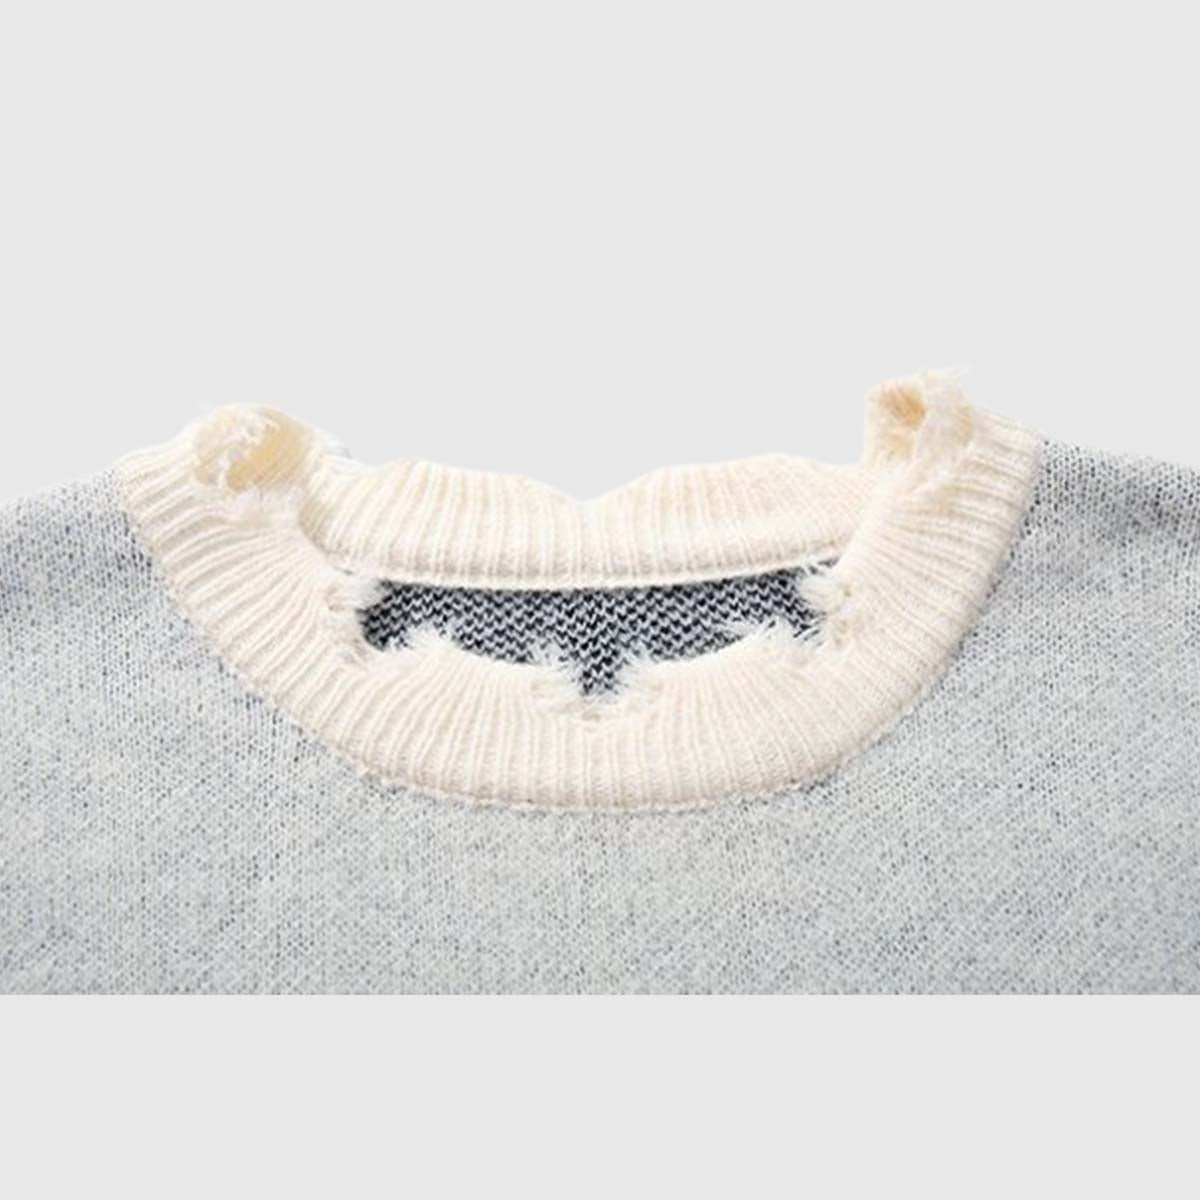 Vintage Distressed Smiley Sweater